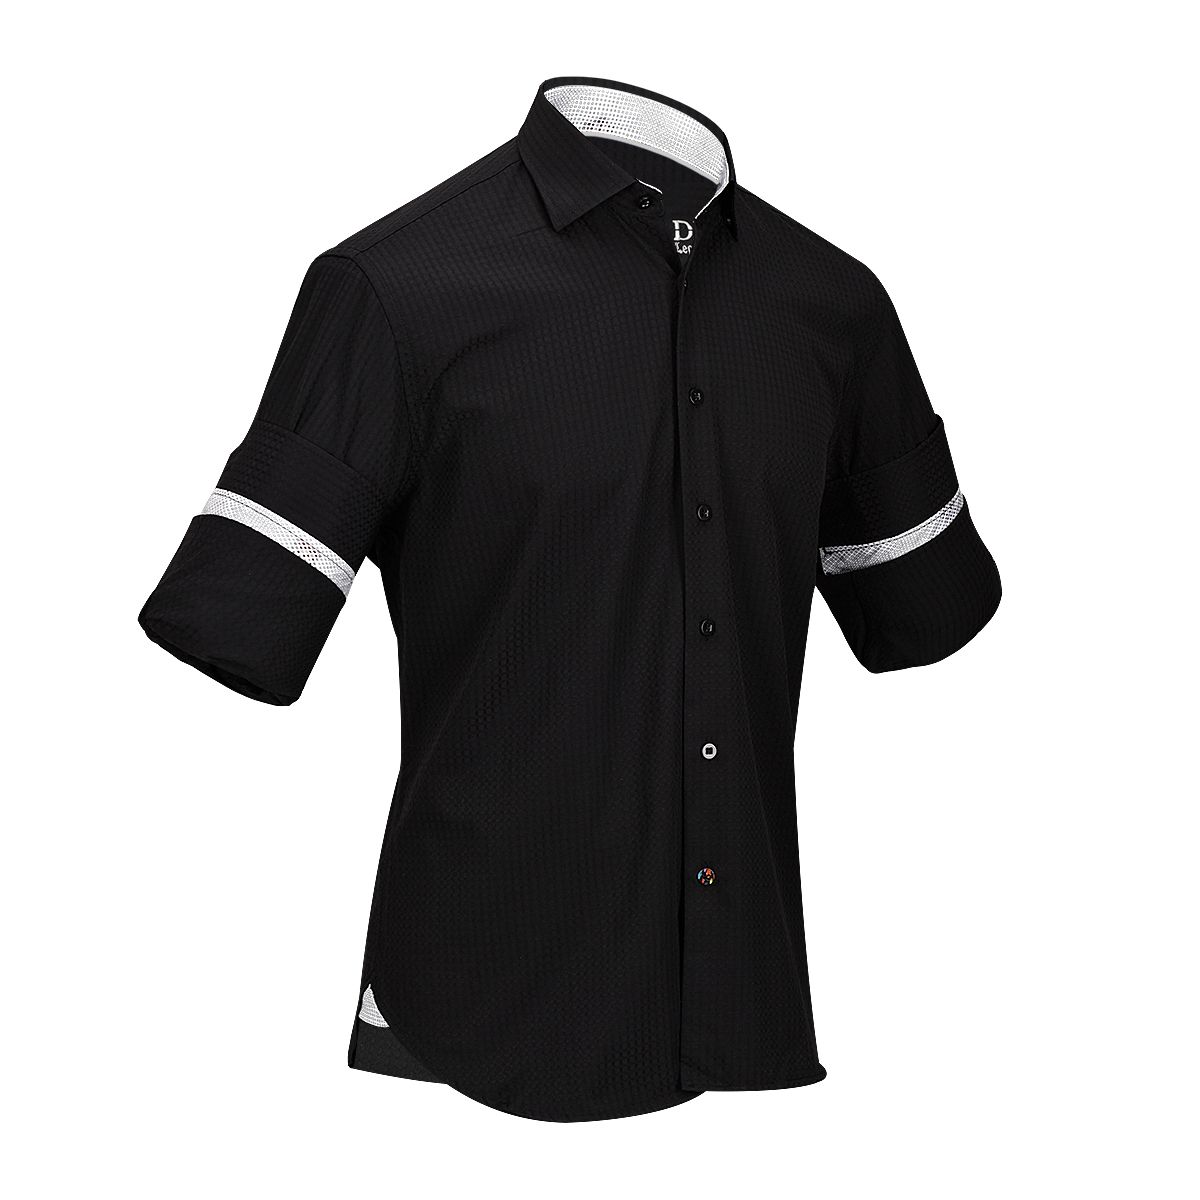 CM04600 - Cuadra black casual fashion short sleeve cotton shirt-CUADRA-Kuet-Cuadra-Boots